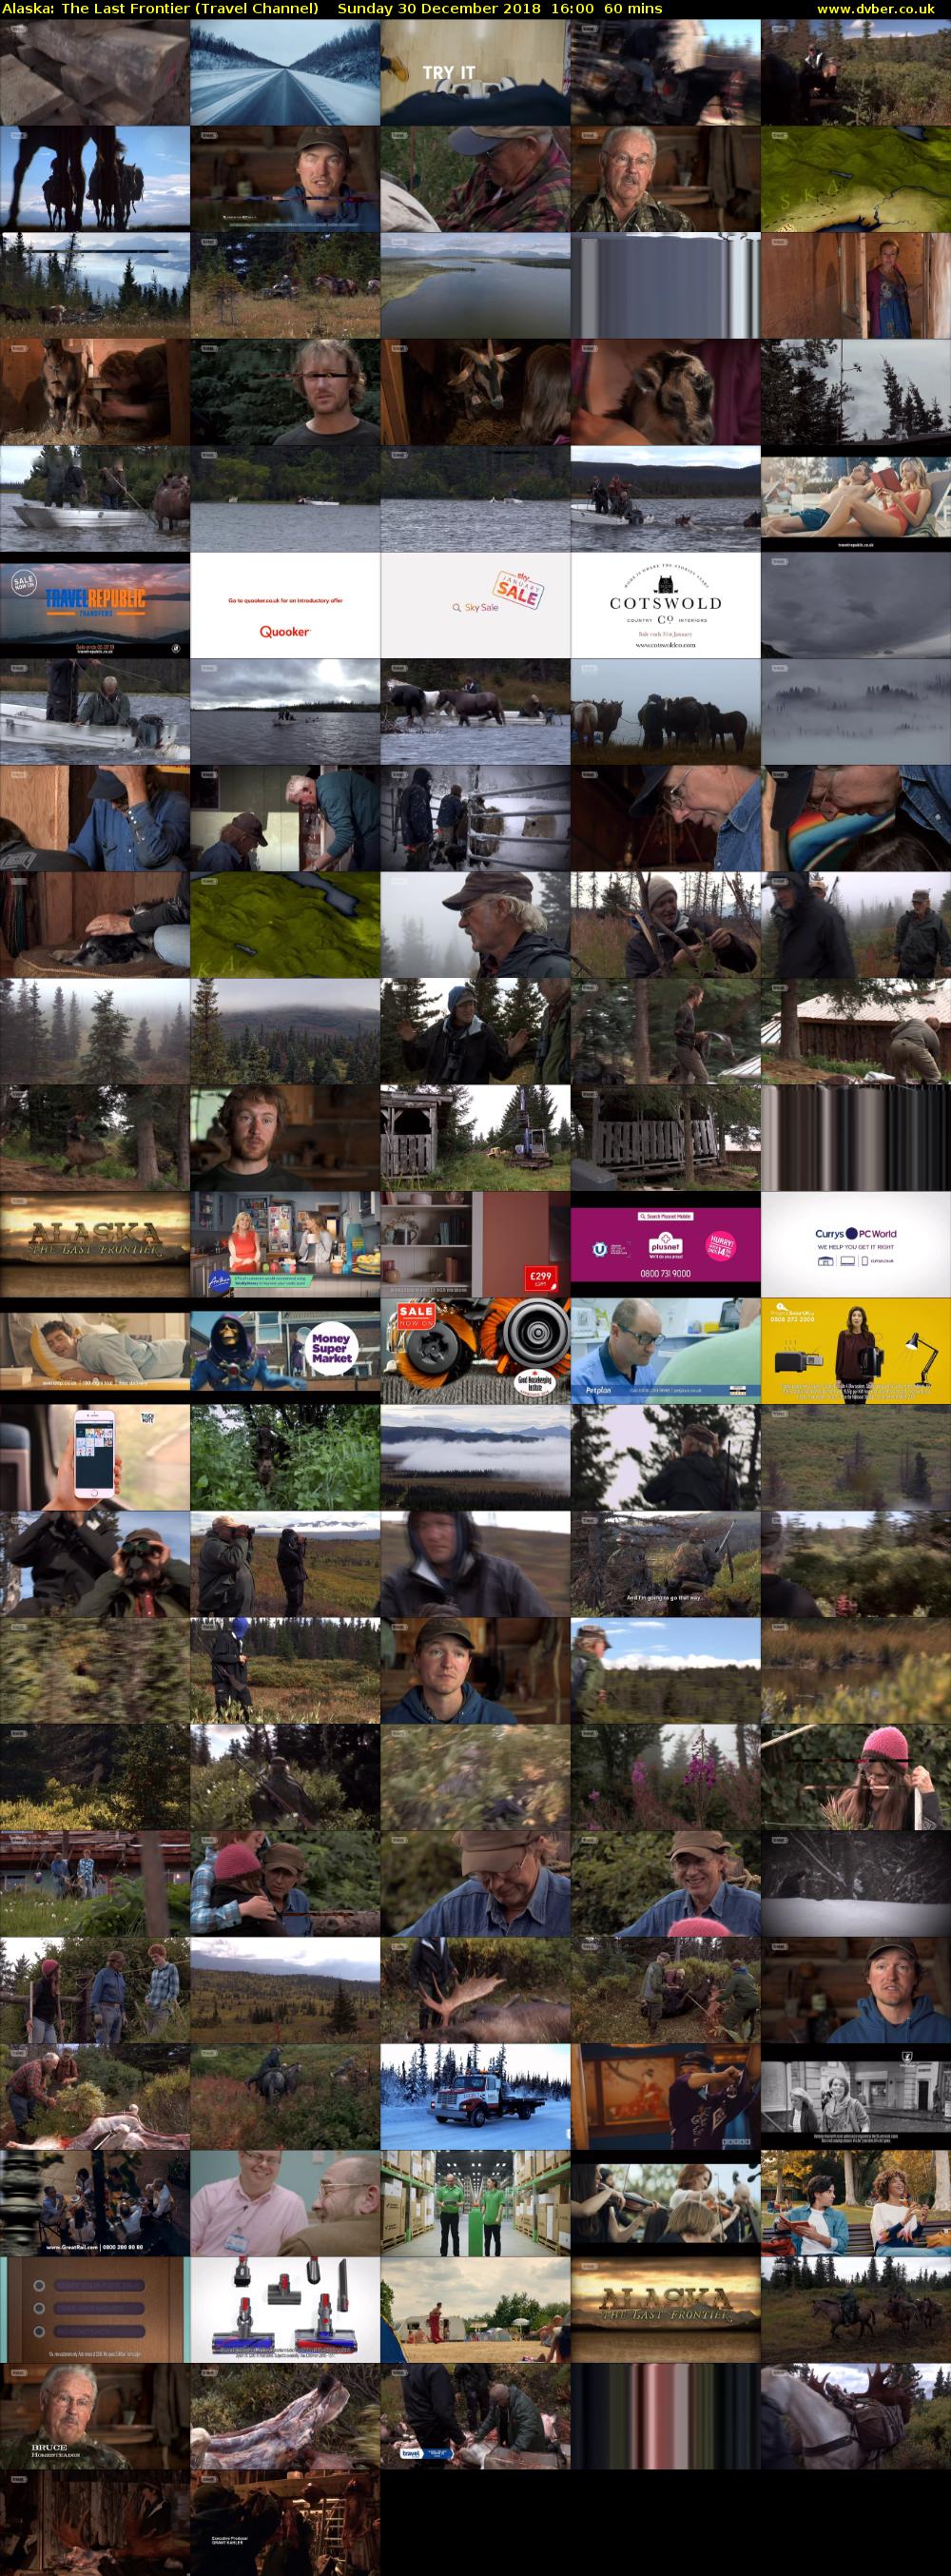 Alaska: The Last Frontier (Travel Channel) Sunday 30 December 2018 16:00 - 17:00